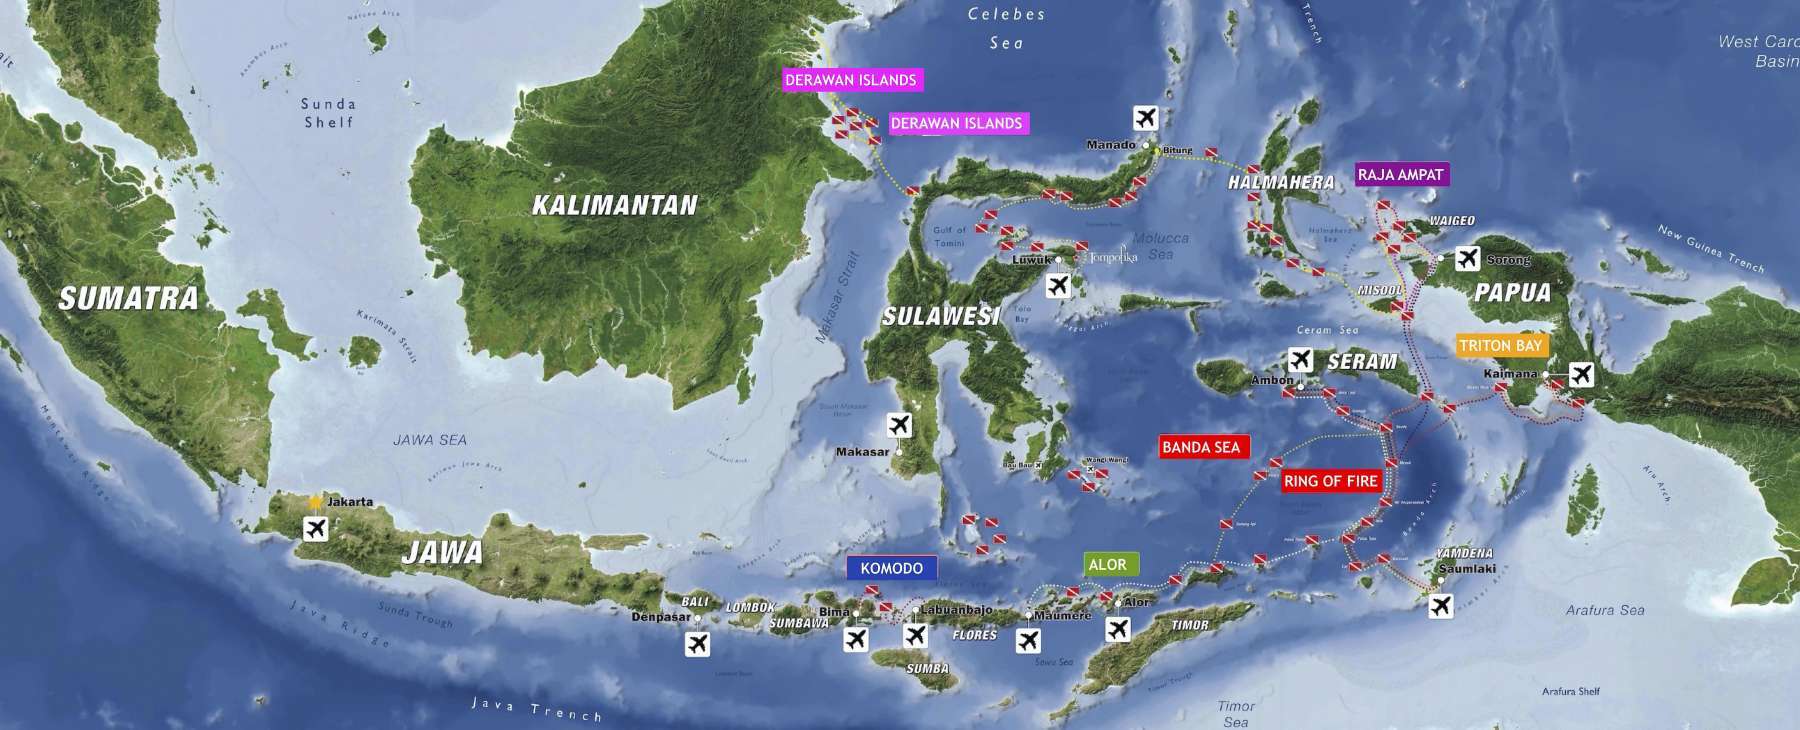 Indonesia Diving destinations